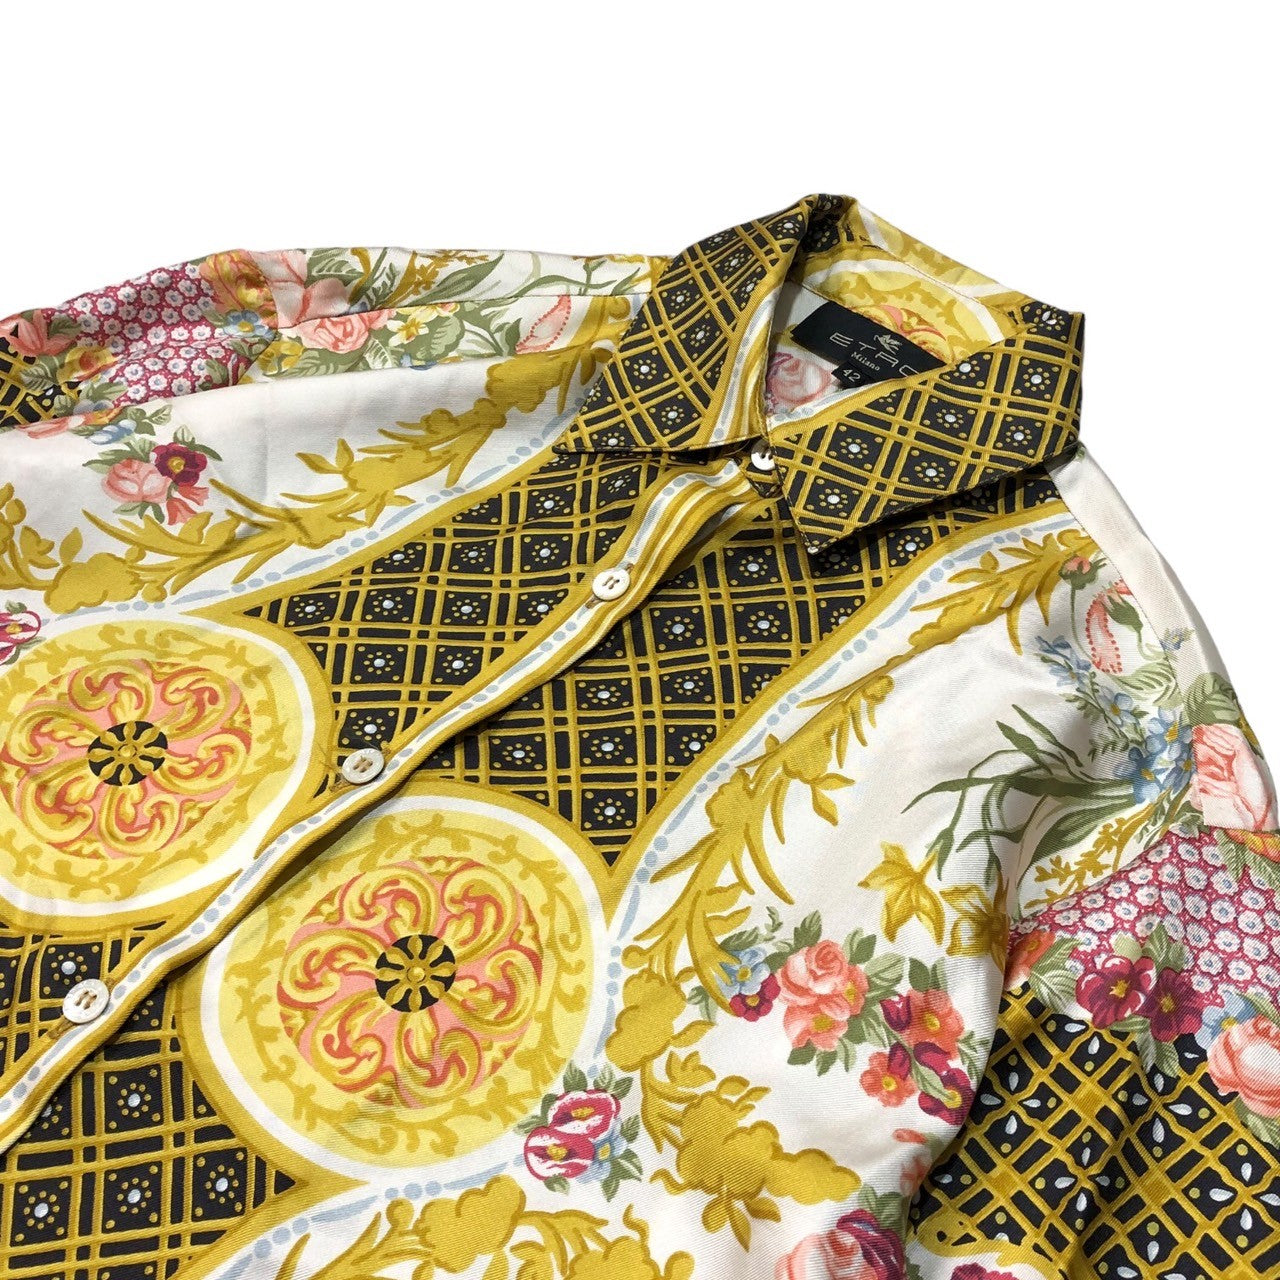 ETRO(エトロ) Scarf pattern all silk shirt スカーフ柄 シルク シャツ 53-12546-9012 42(XL程度) ゴールド×ホワイト